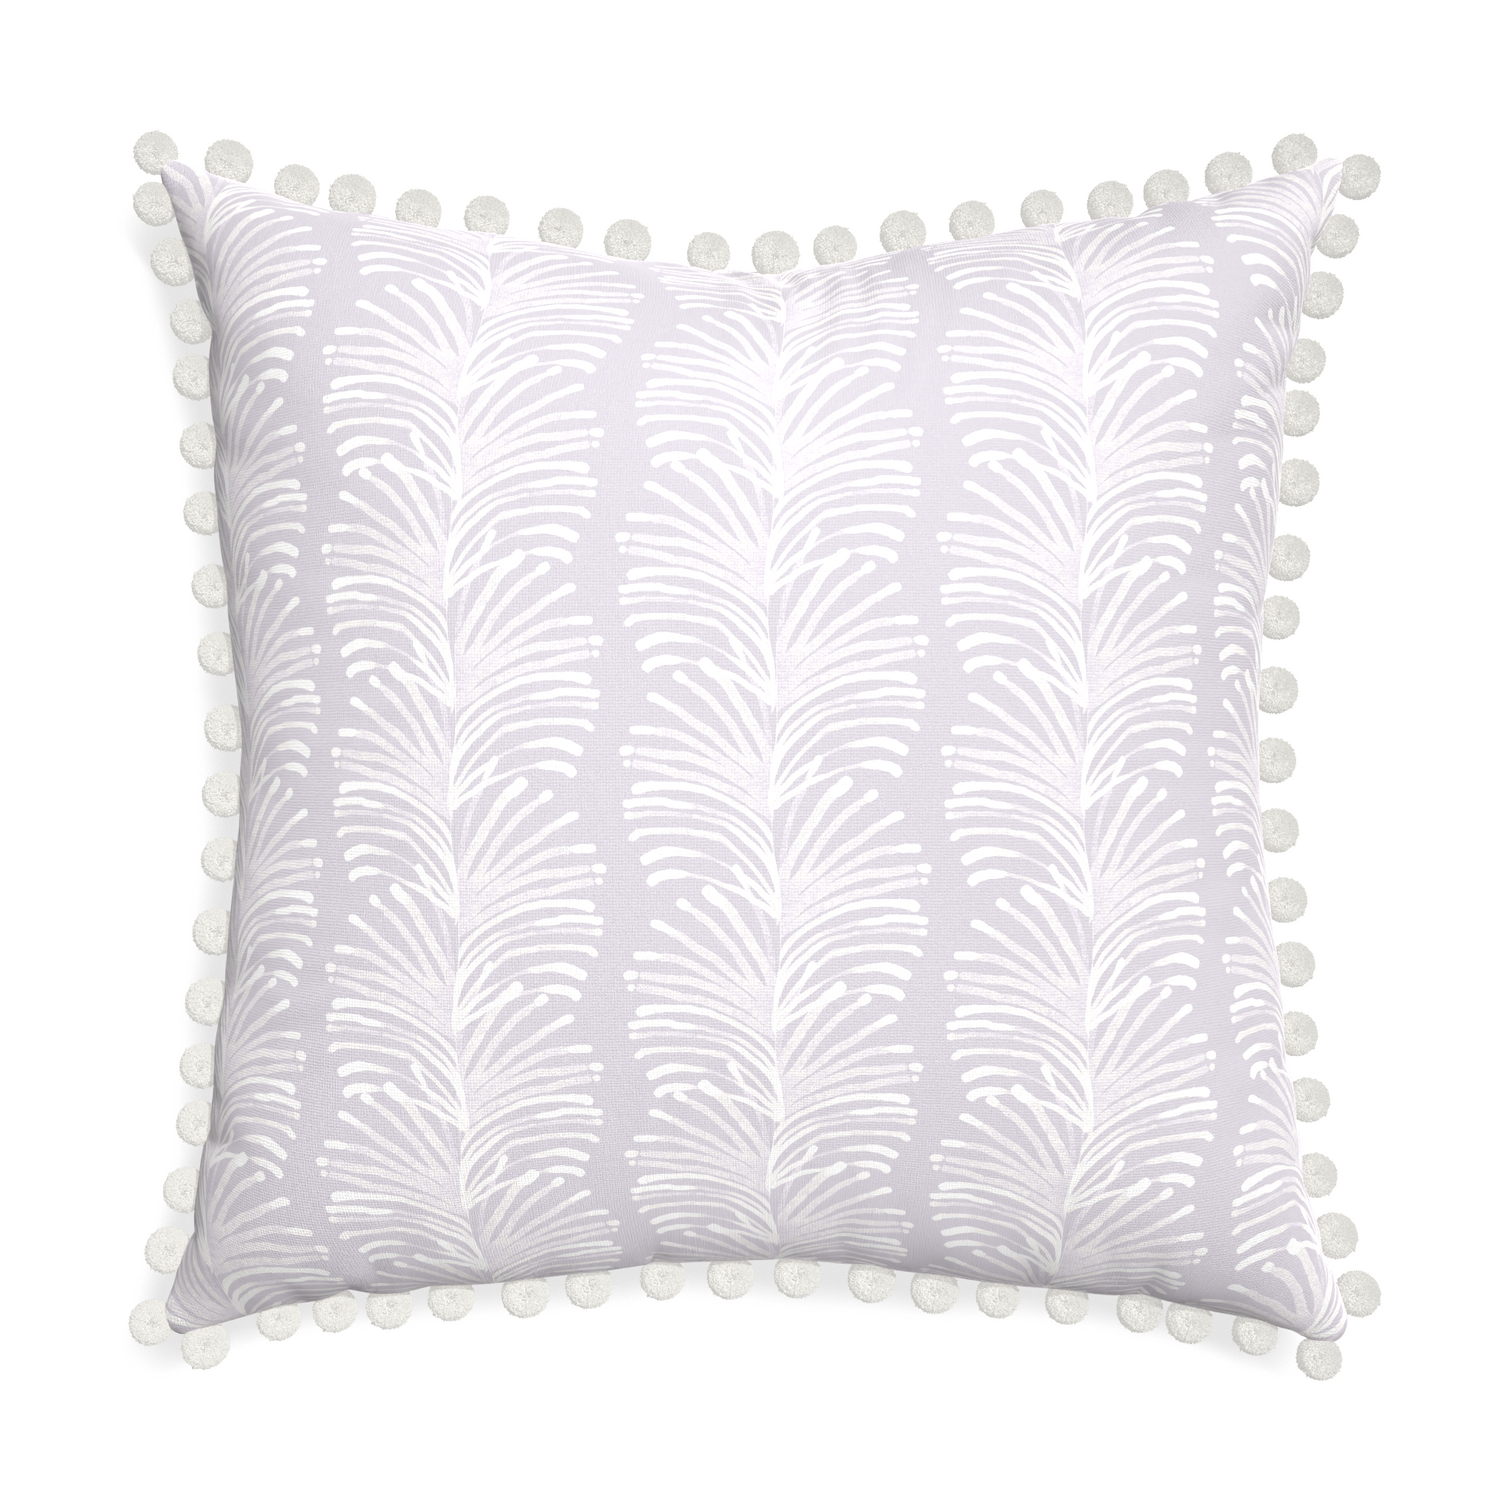 Euro-sham emma lavender custom pillow with snow pom pom on white background